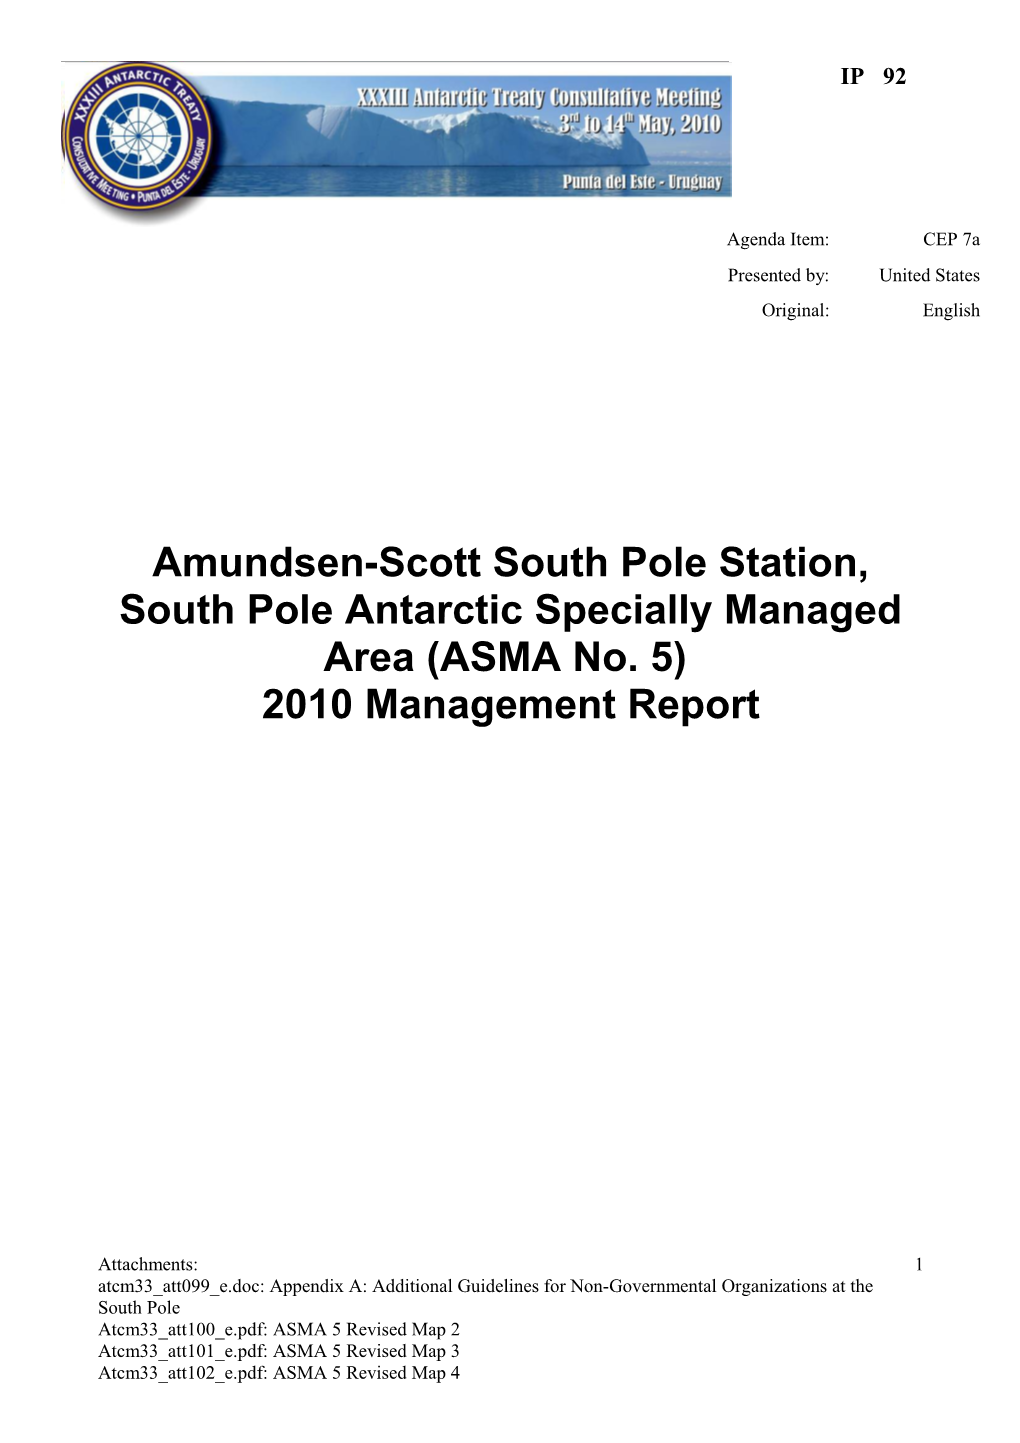 Amundsen-Scott South Pole Station, South Pole Antarctic Specially Managed Area (ASMA No